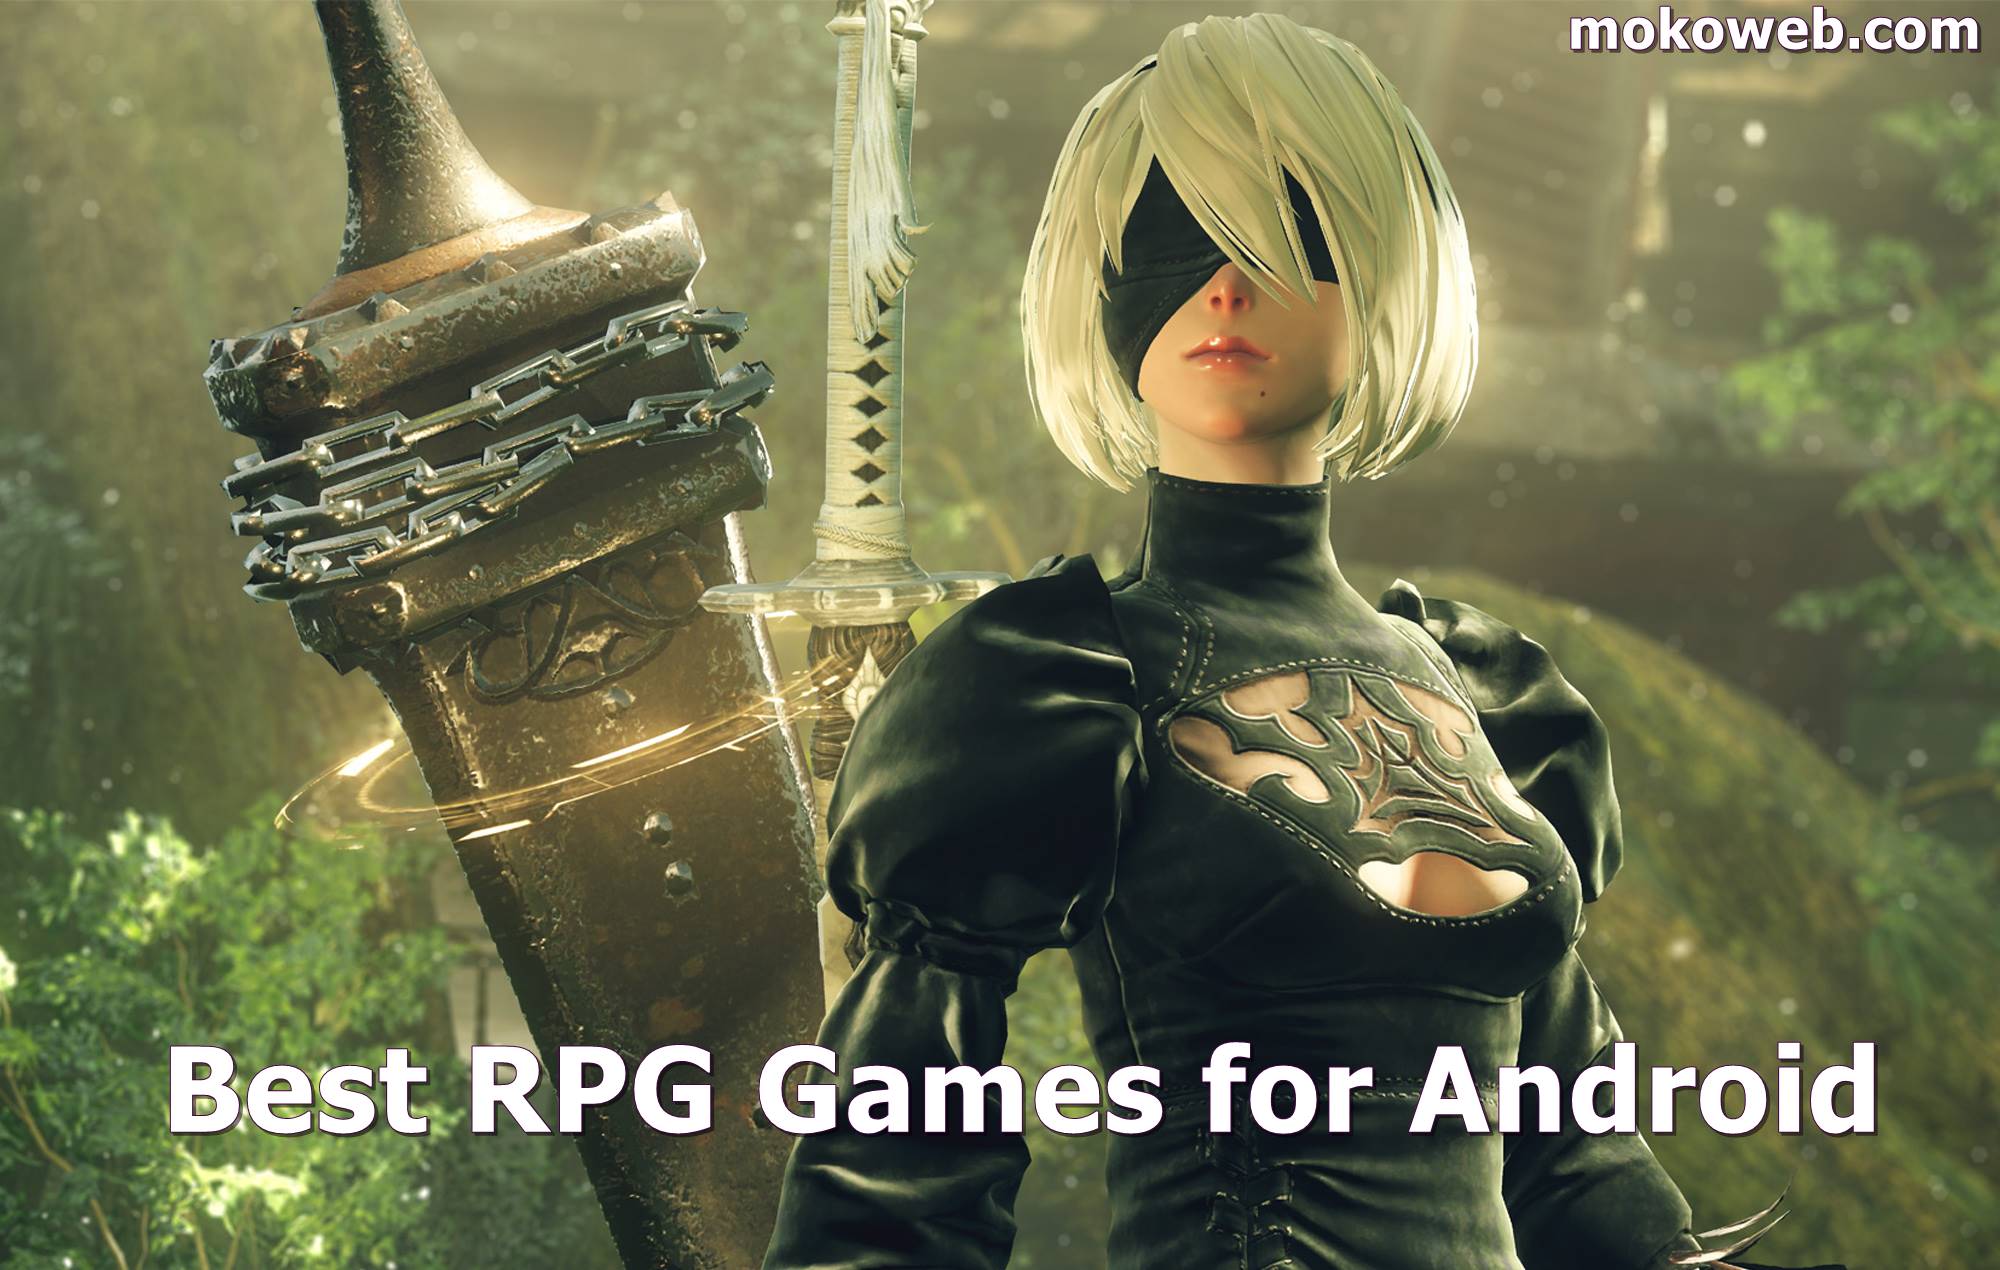 20 Best Free Offline RPG Games